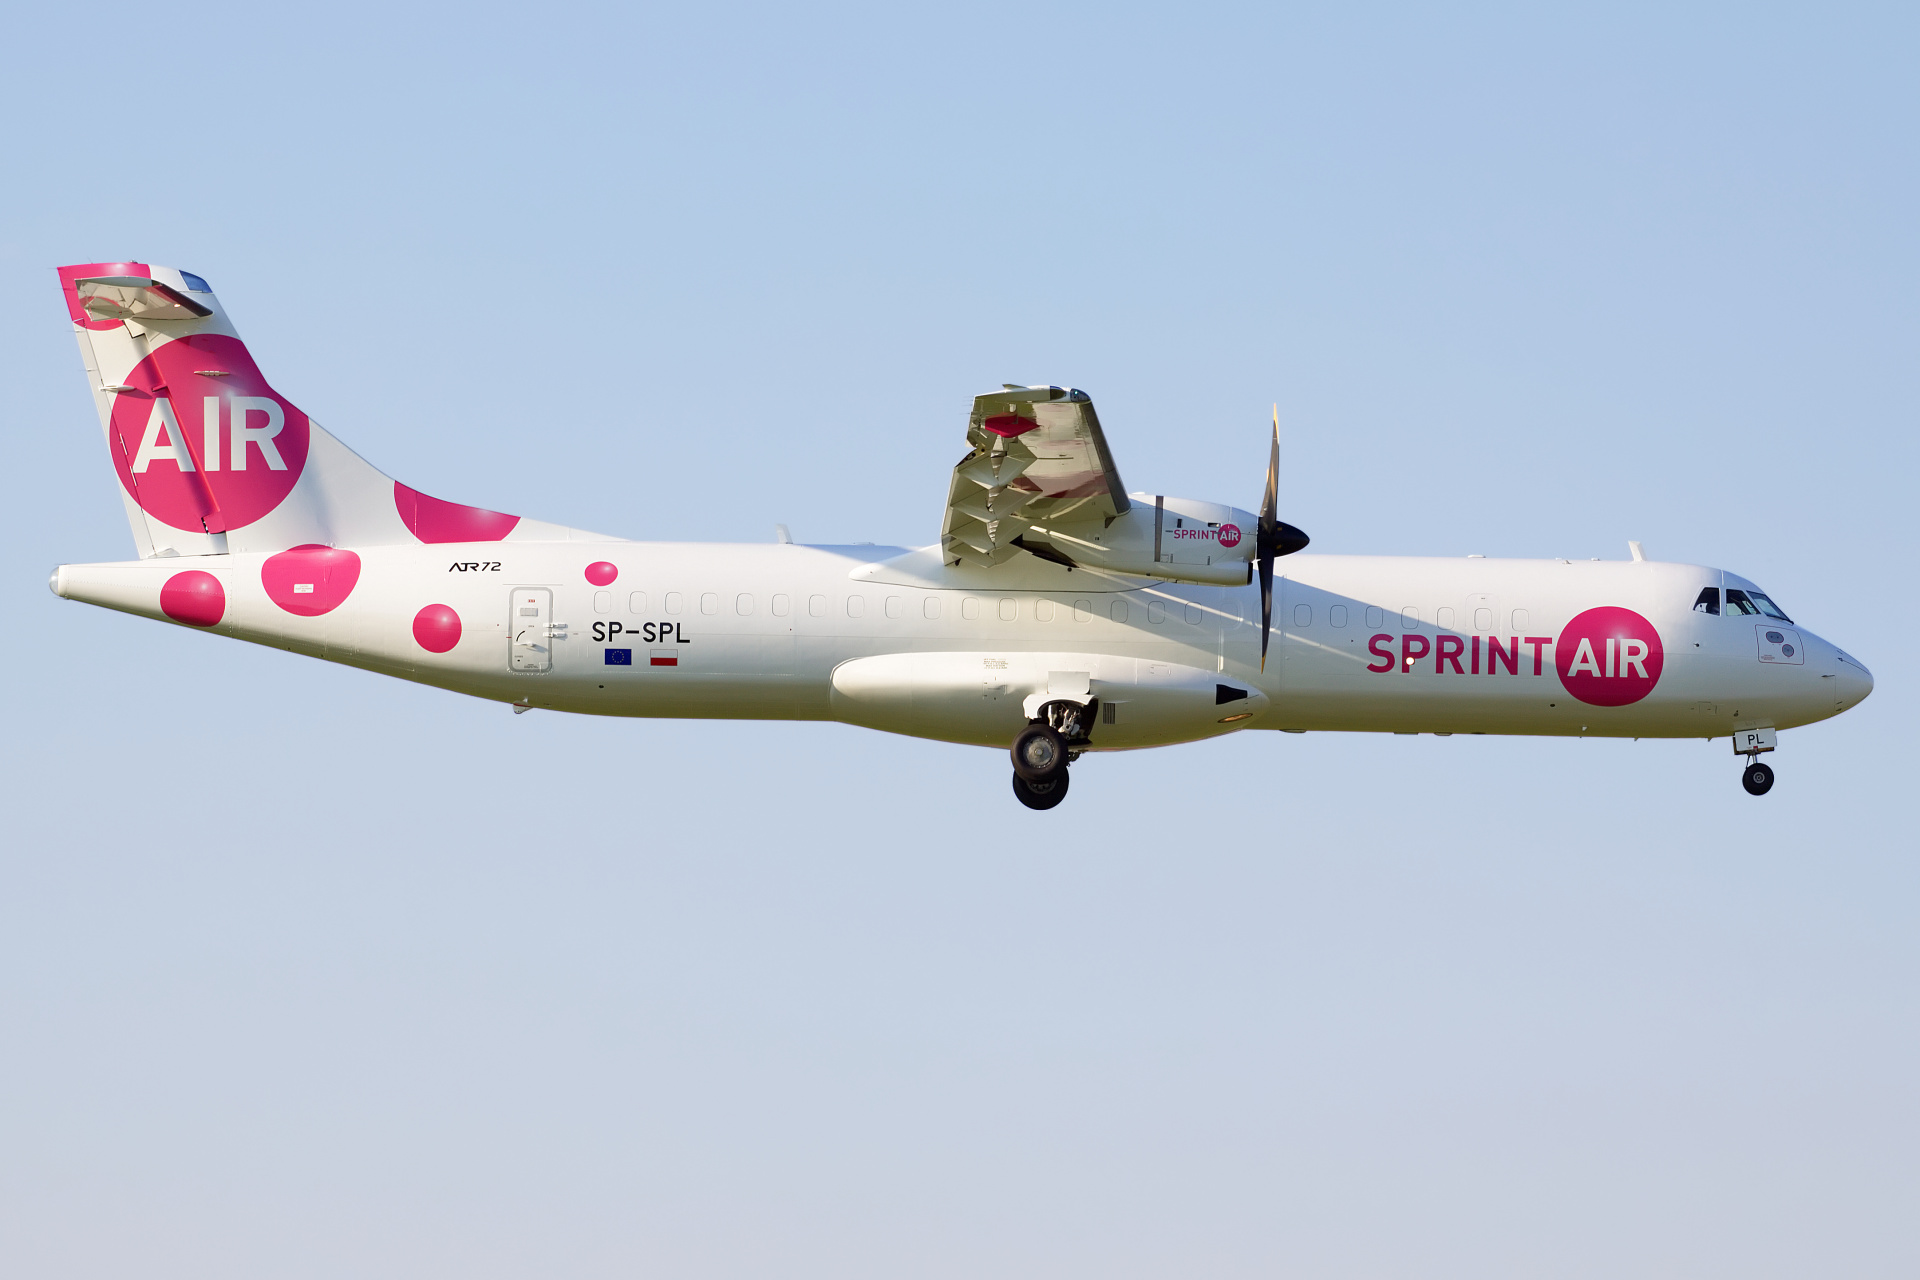 SP-SPL (Aircraft » EPWA Spotting » ATR 72 » SprintAir)